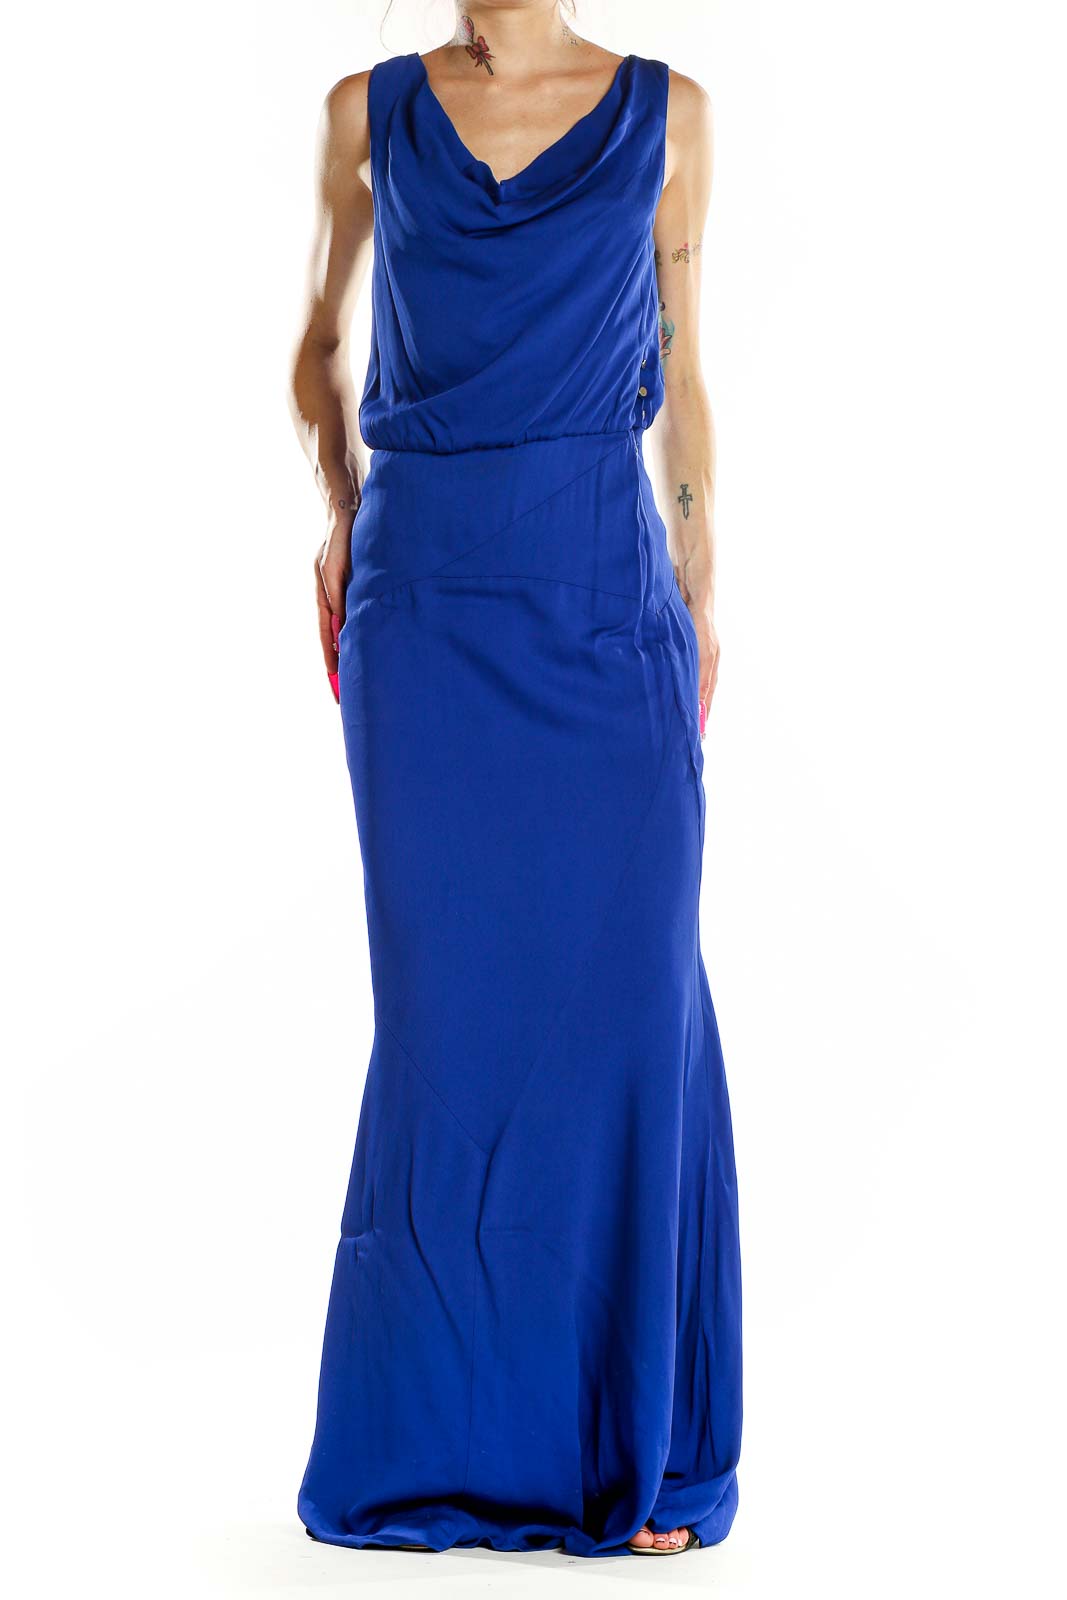 Blue Floor Length Cowl Neck Evening Dress Front